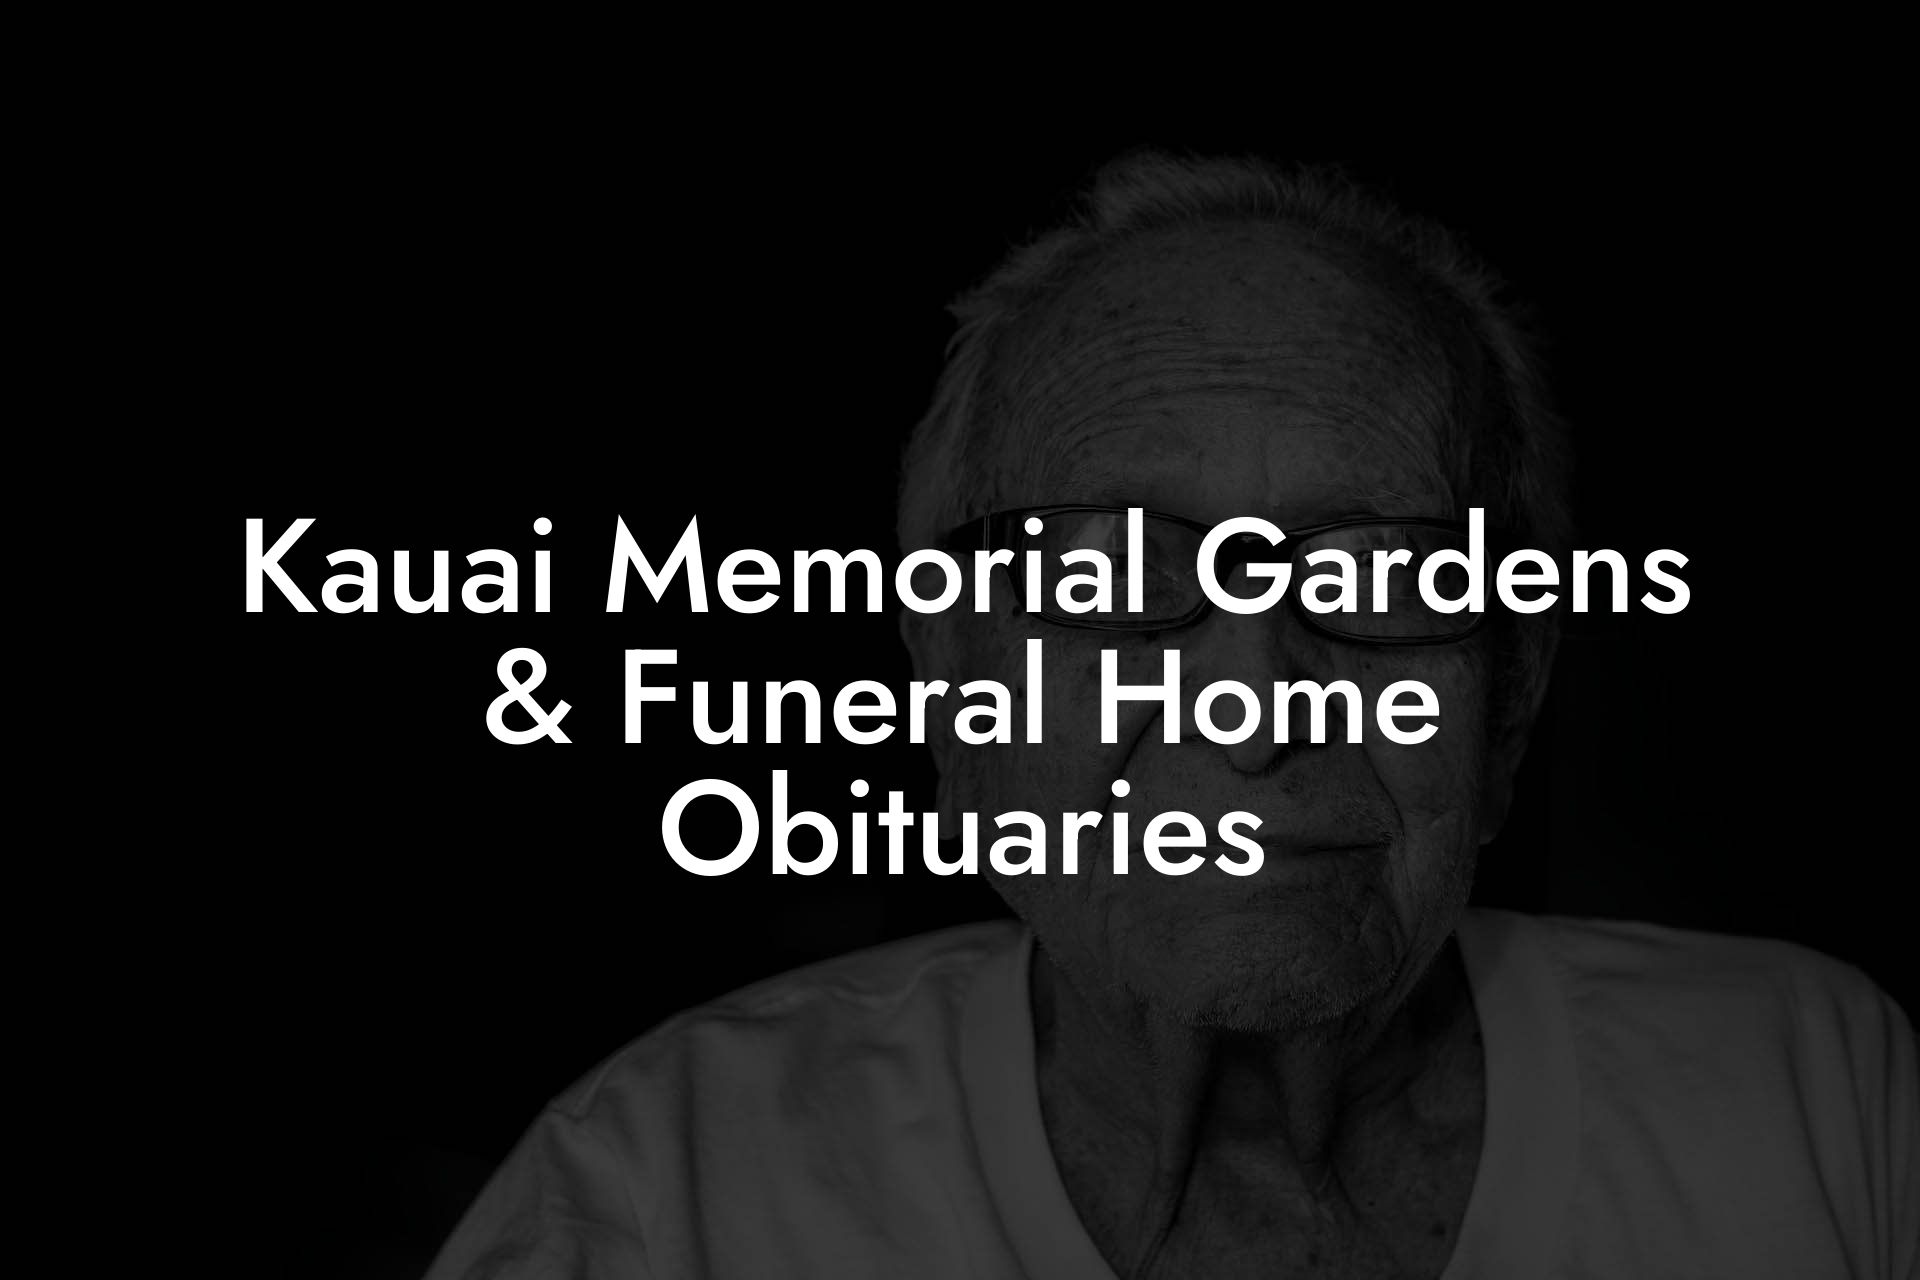 Kauai Memorial Gardens & Funeral Home Obituaries